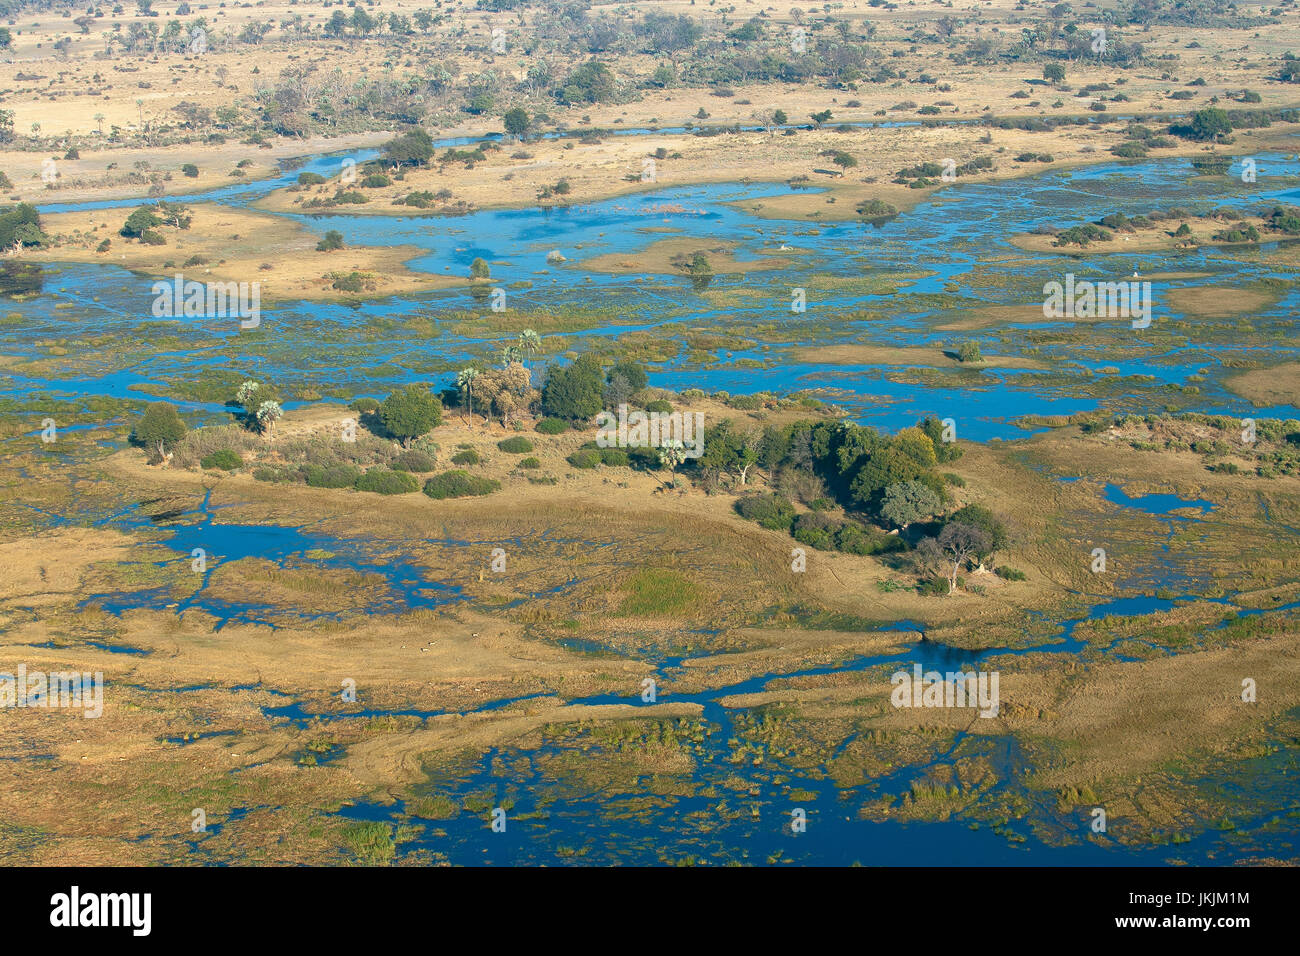 Aerial view of the Okavango Delta, Moremi Game Reserve, Botswana Stock Photo